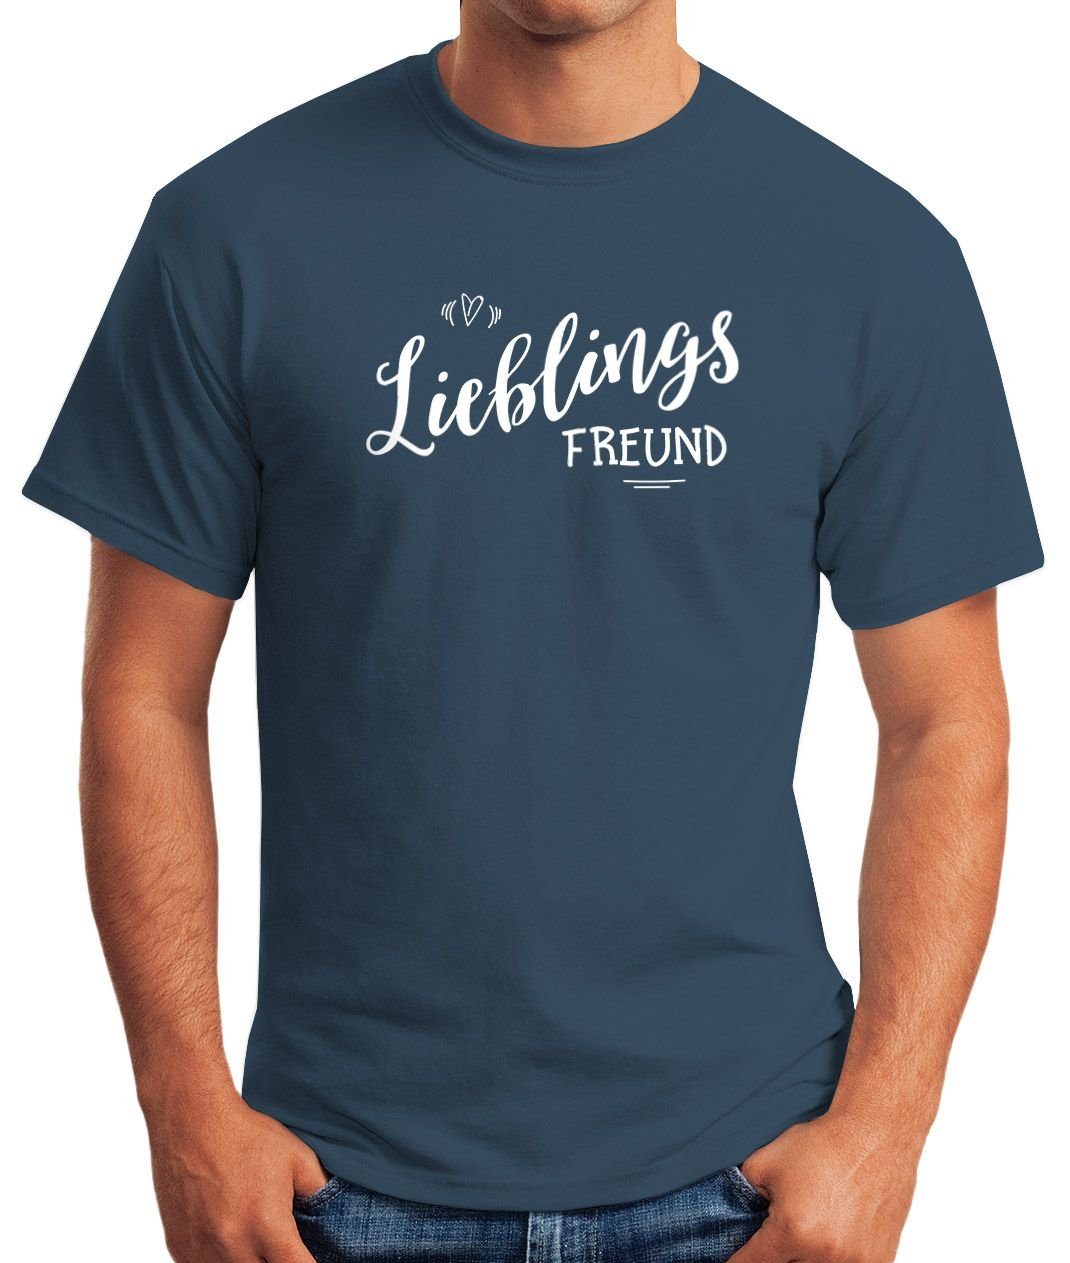 MoonWorks Print-Shirt Print Freund Lieblingsfreund Liebe blau Geschenk Partner T-Shirt Freundschaft Moonworks® mit Herren